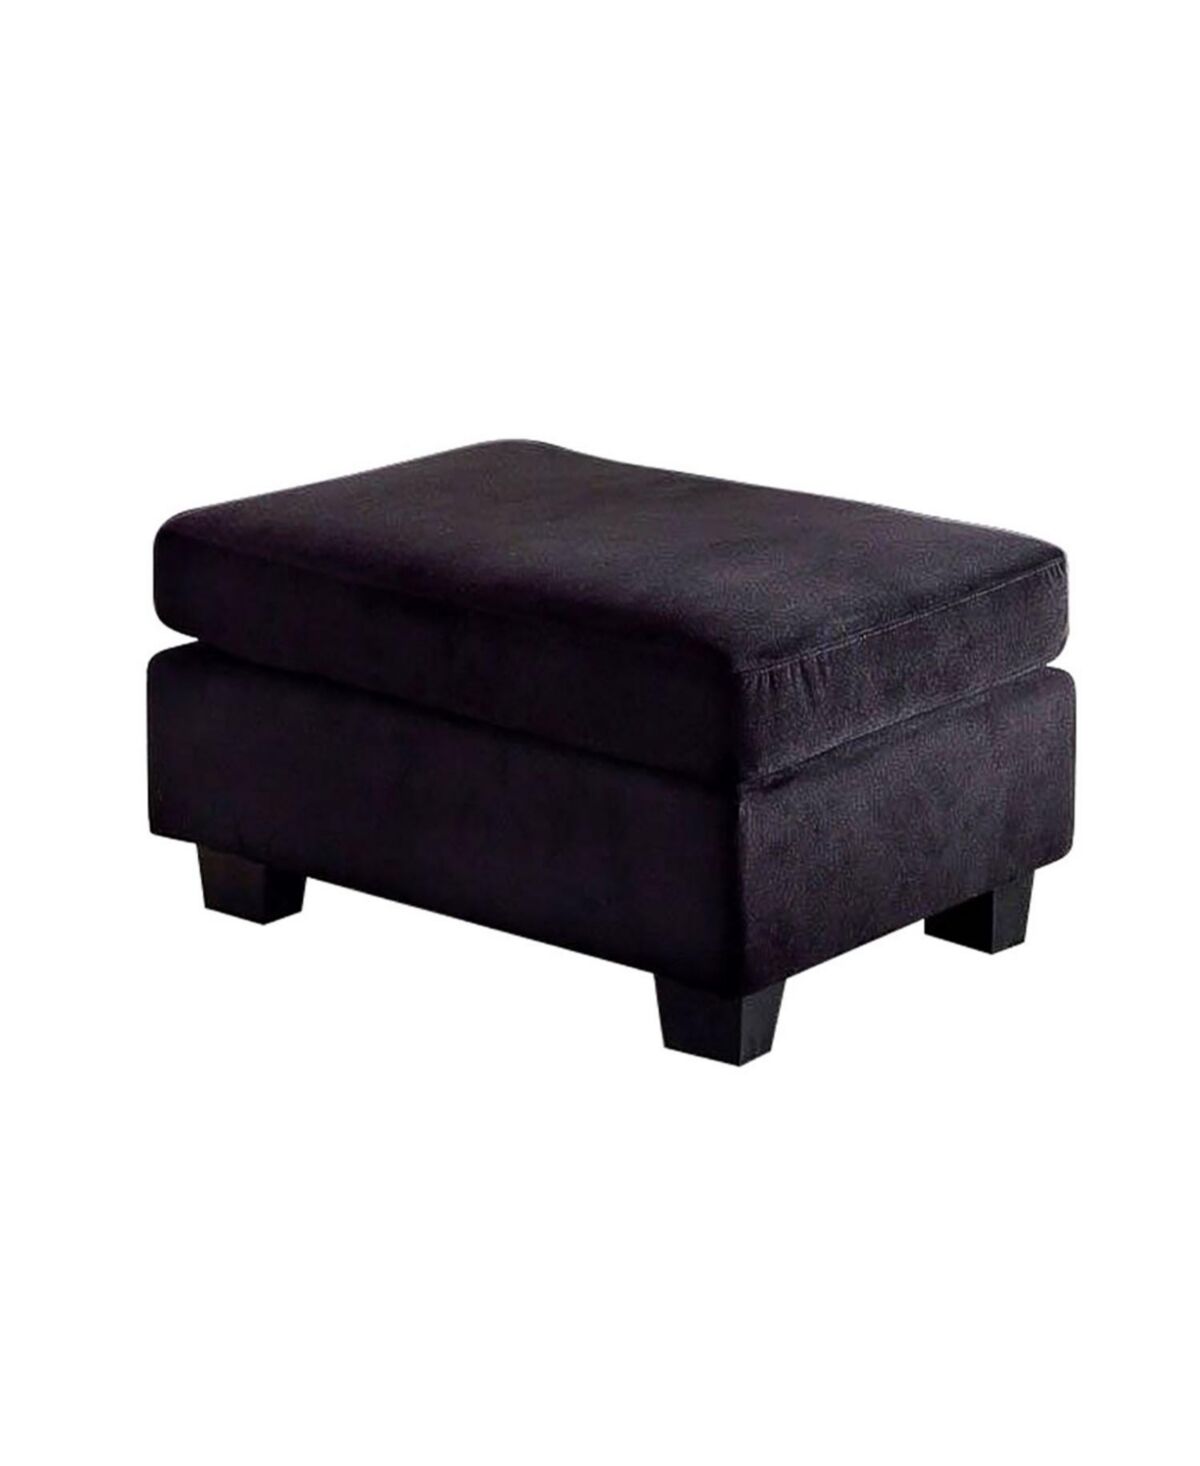 Simple Relax Flannelette Living Room Ottoman, Black - Black